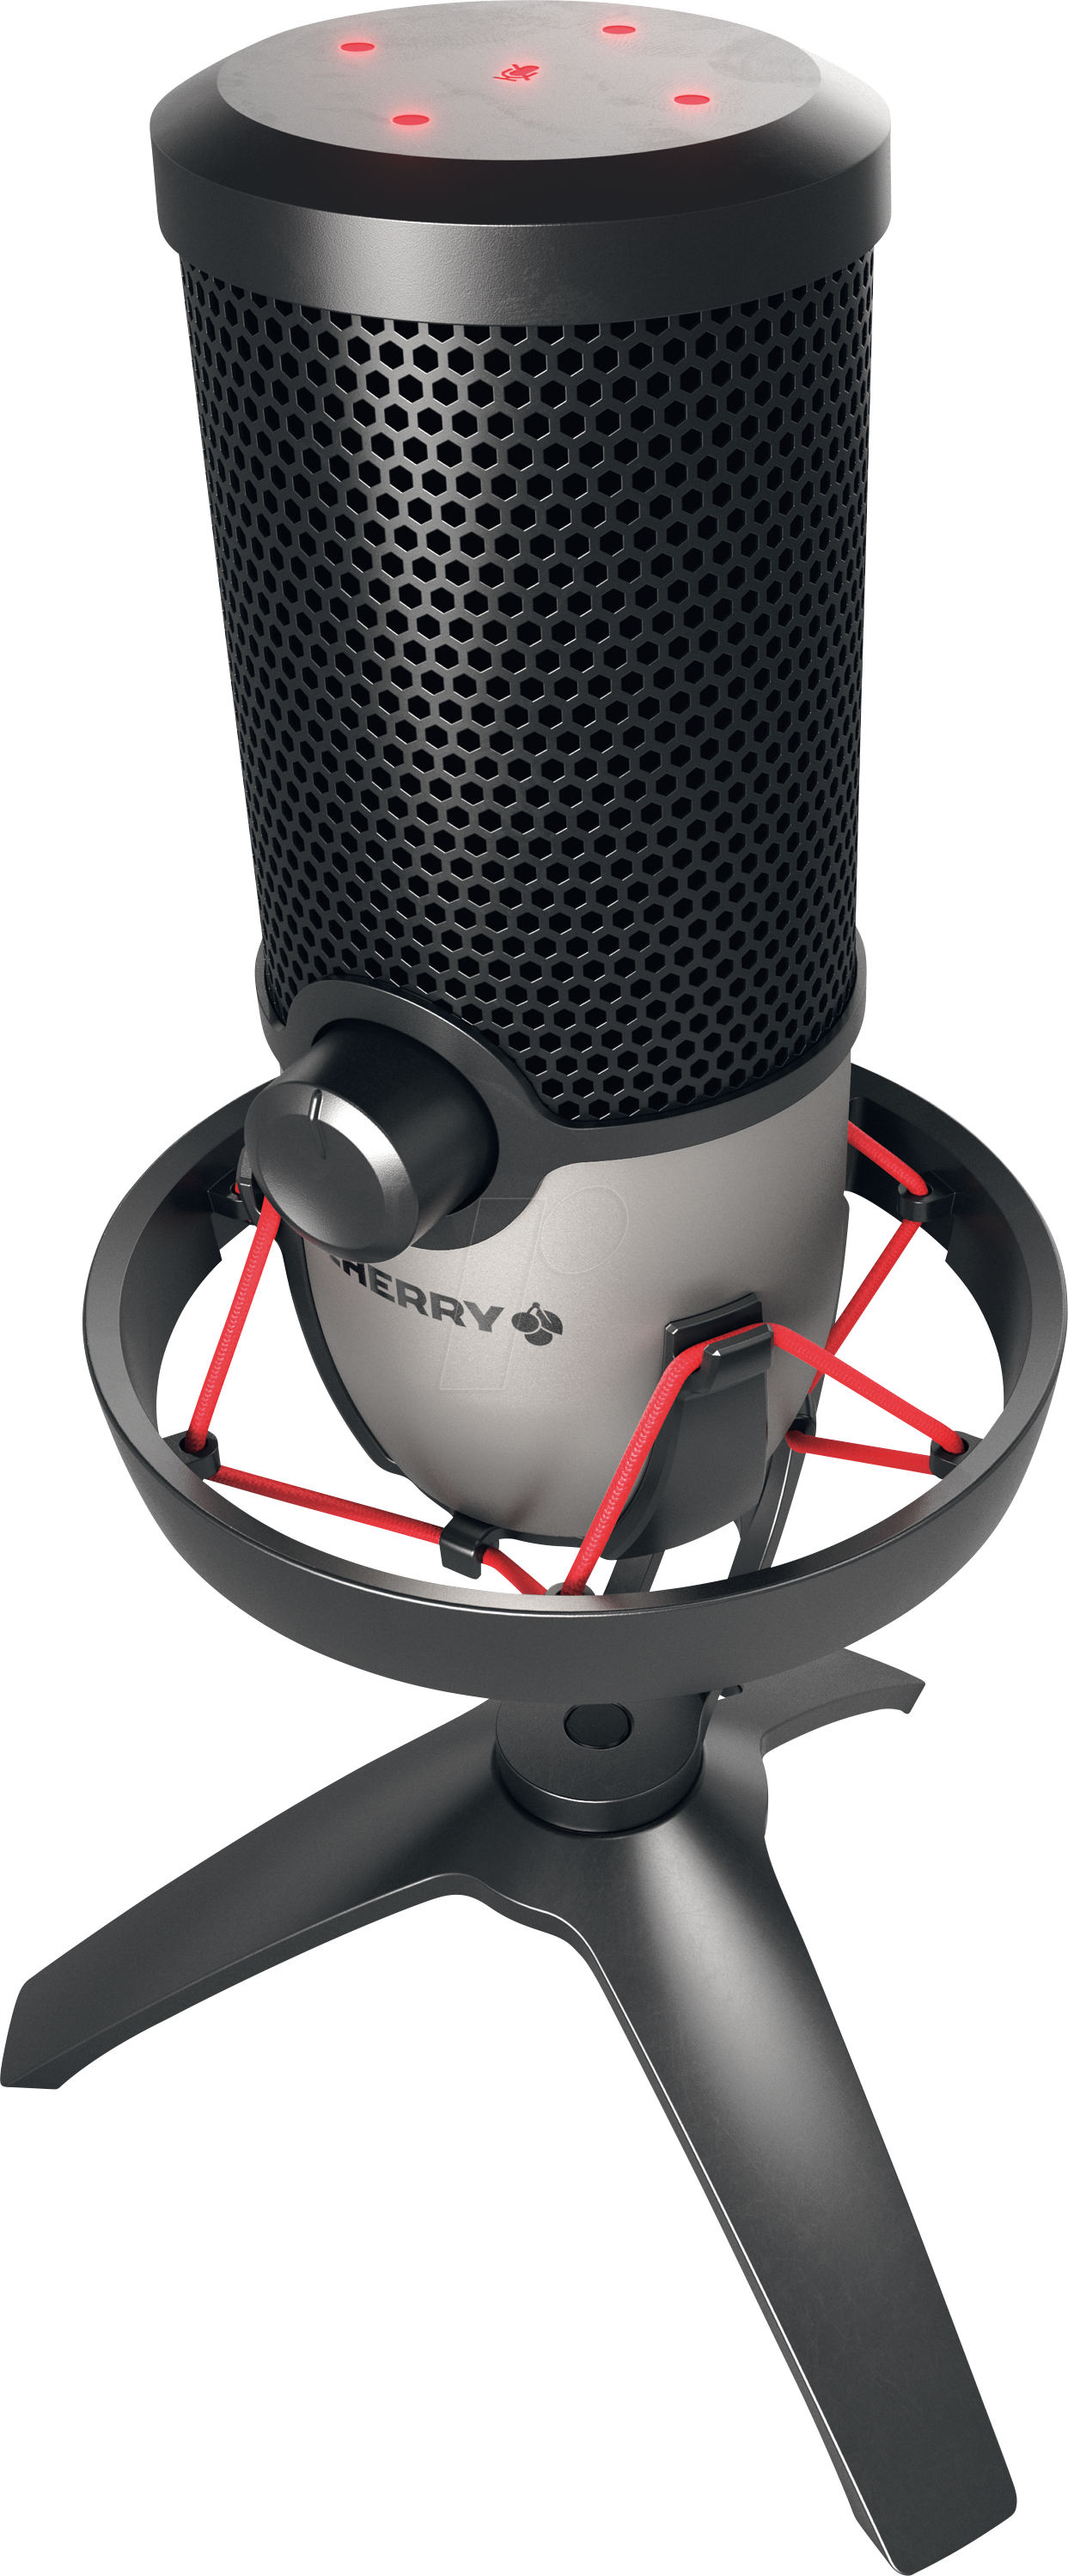 CHERRY JA-0710 - Mikrofon, USB von Cherry